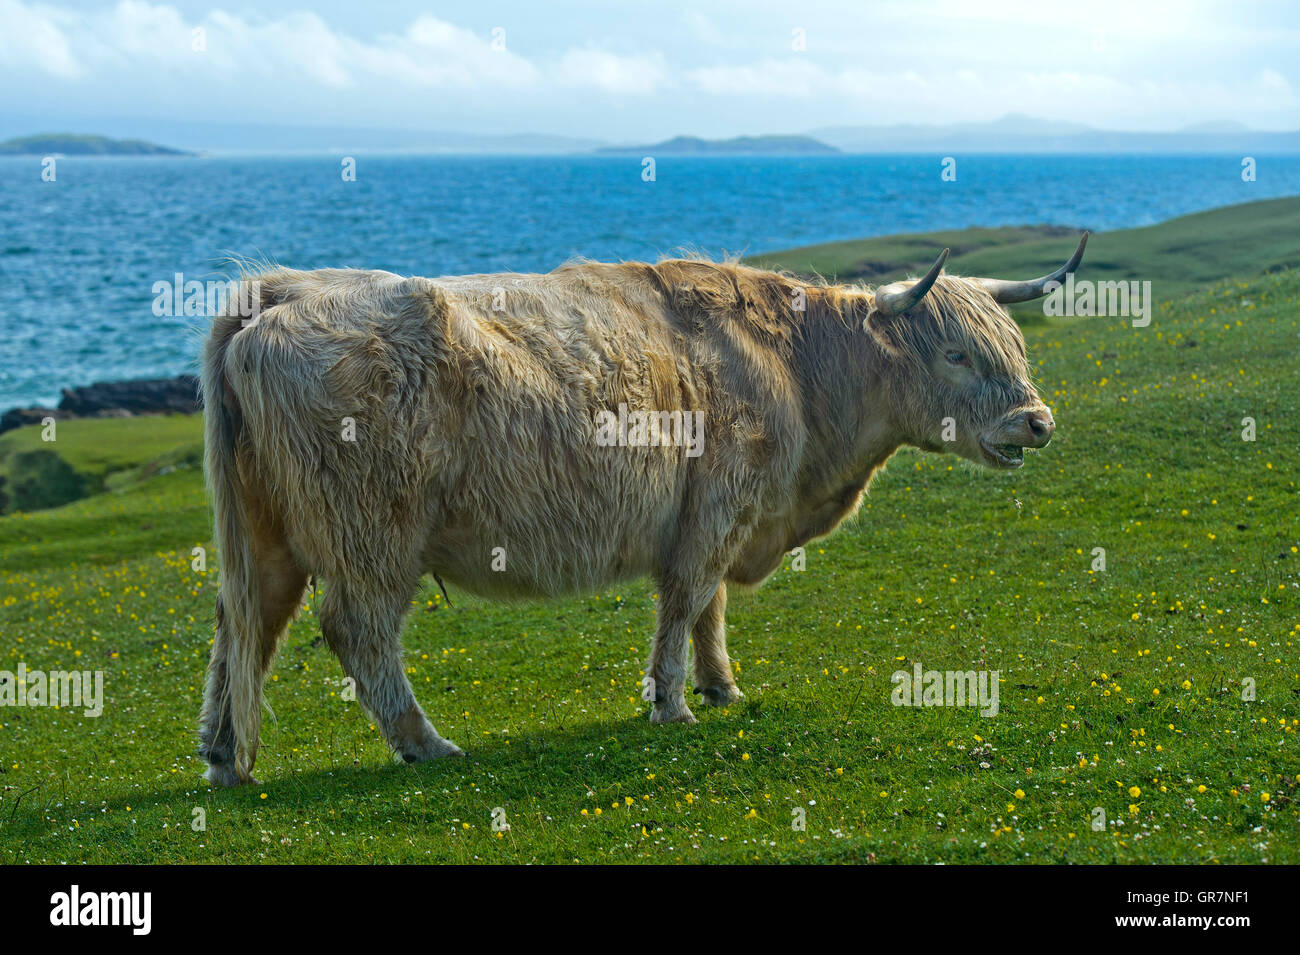 Scottish Highland Cattle Or Kyloe, On A Pasture, Scotland, Great Britain Stock Photo